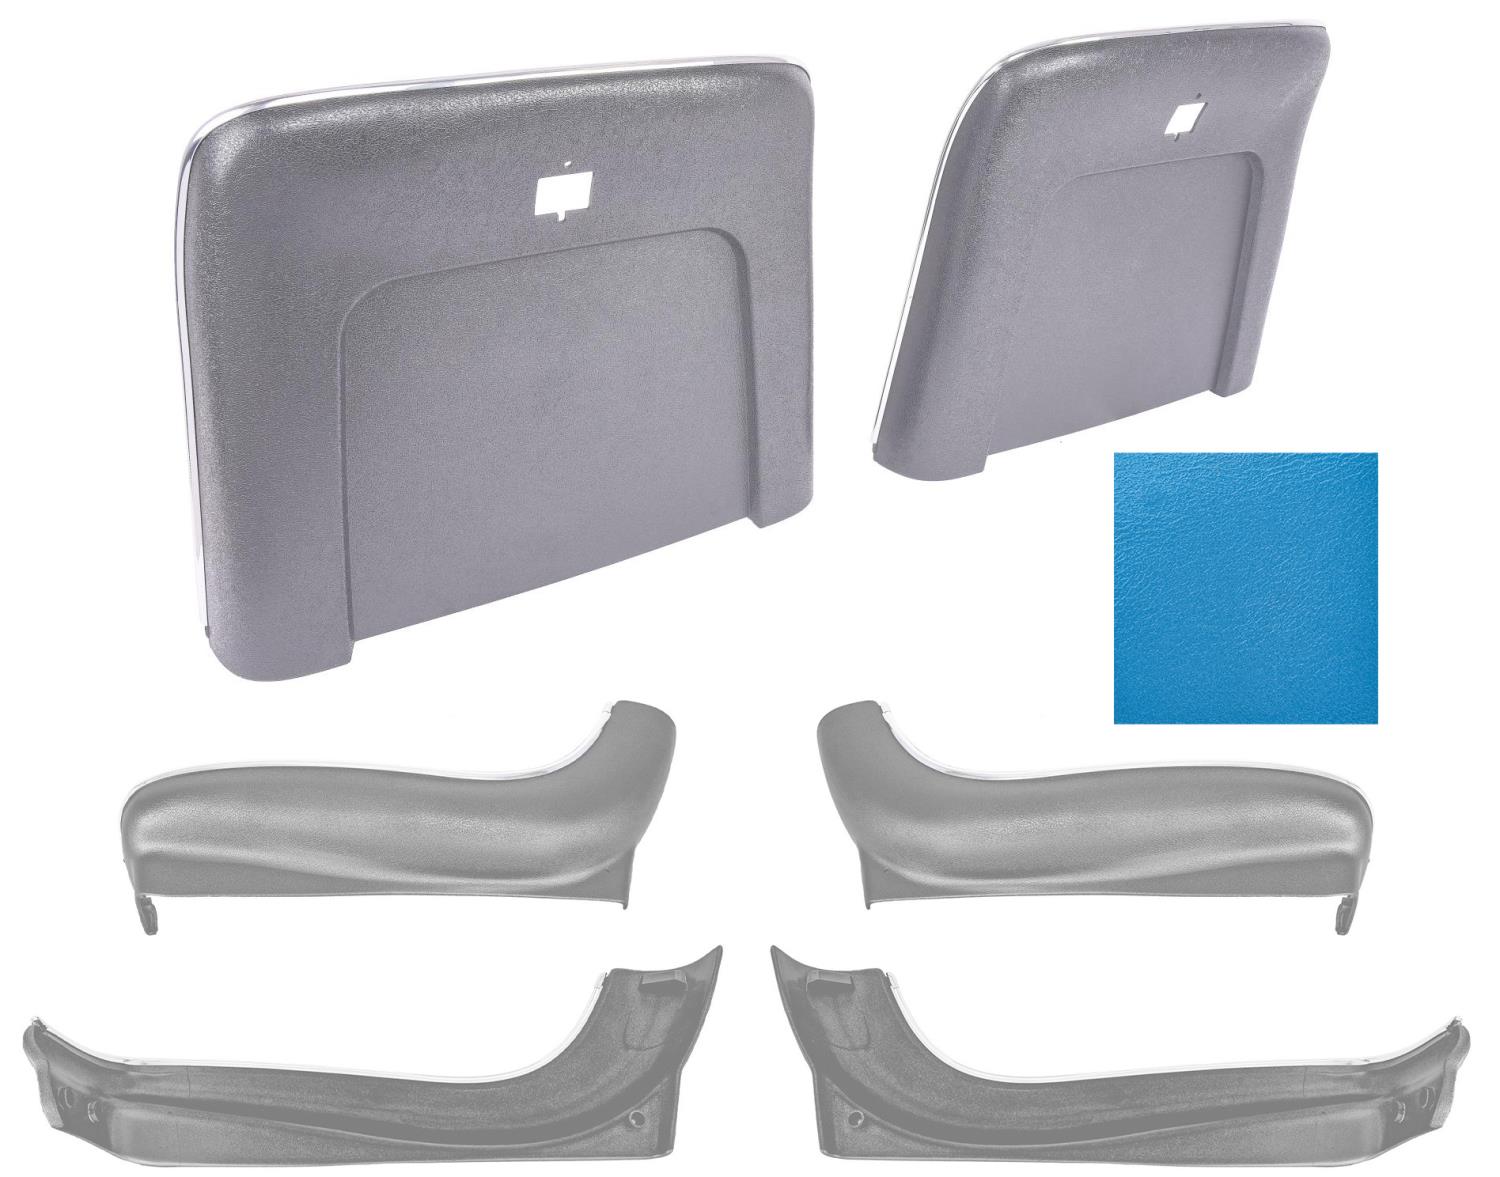 Seat Backs & Sides Kit Fits Select 1969-1972 GM Models [Bright Blue]